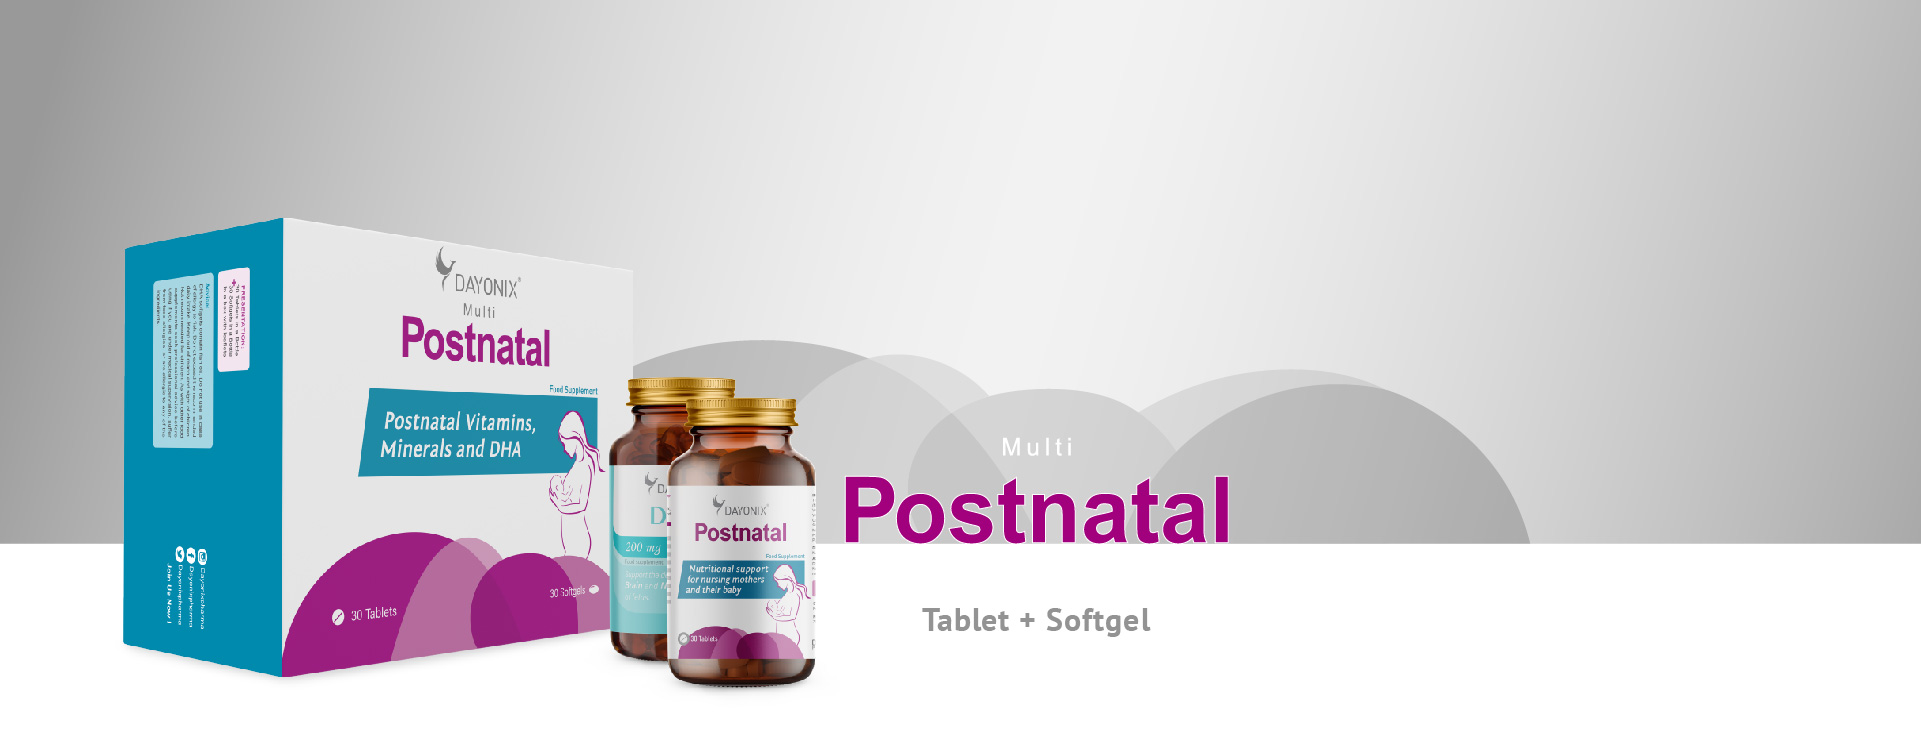 Multi postnatal Box